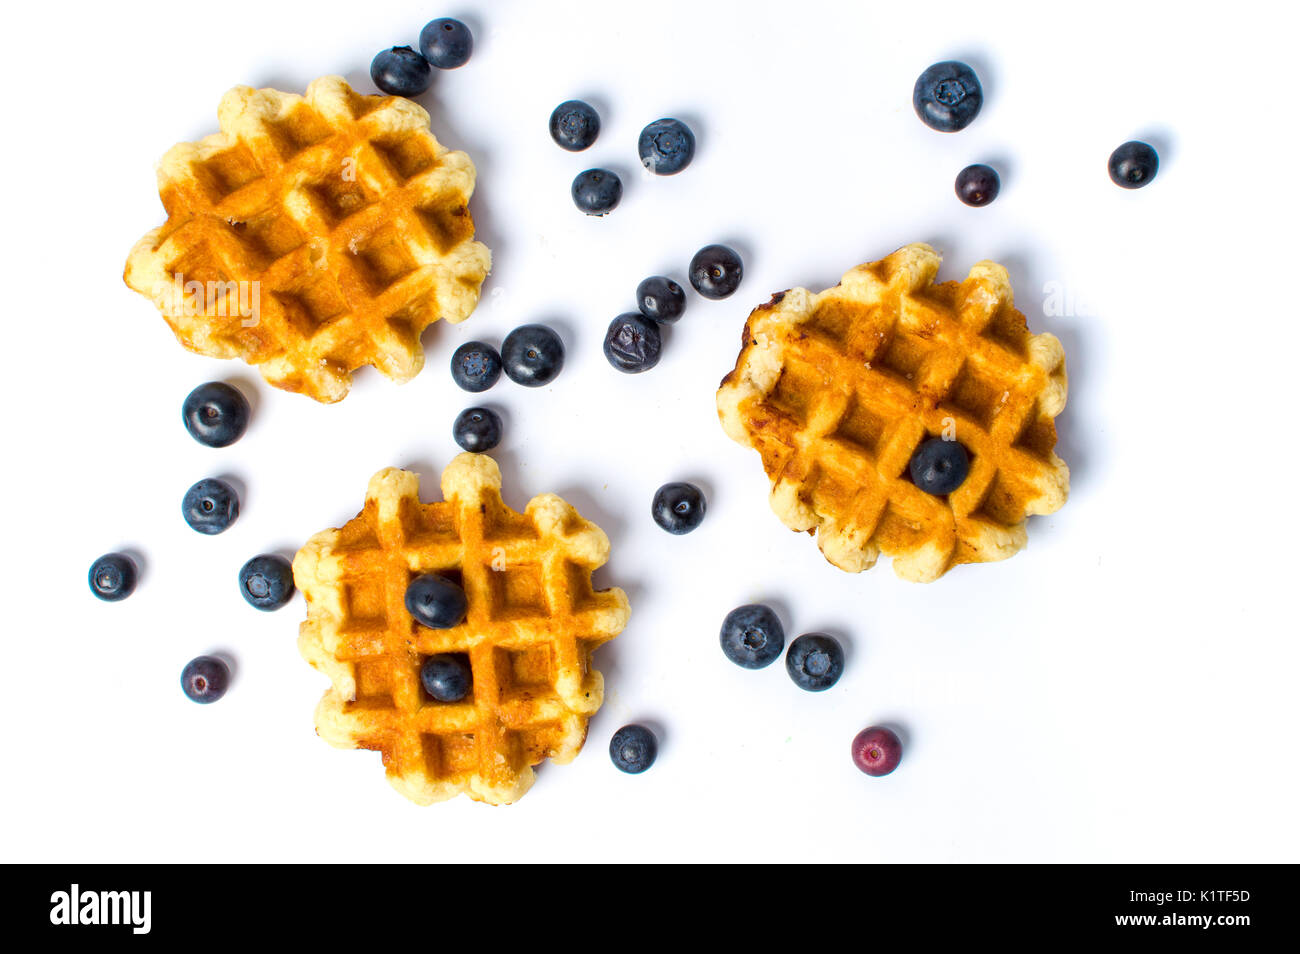 Baked waffles and blueberriesi solated on white background Stock Photo